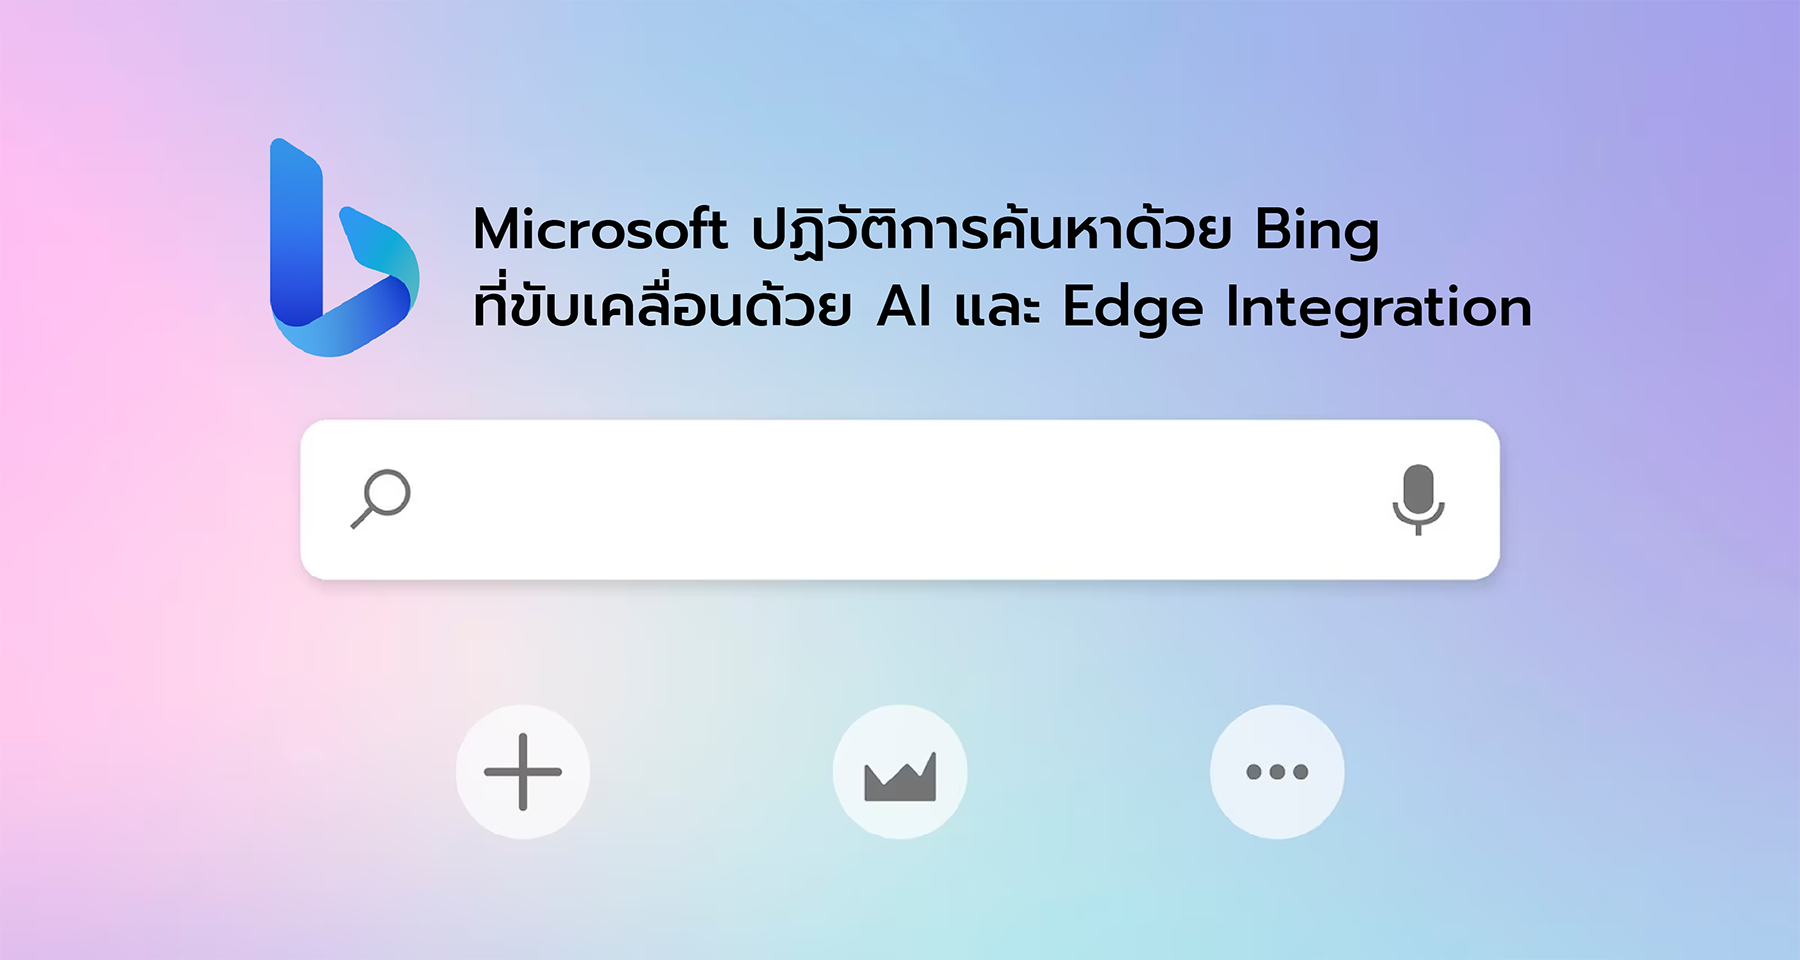 Microsoft ปฏิวัติการค้นหาด้วย Bing ที่ขับเคลื่อนด้วย AI และ Edge Integration